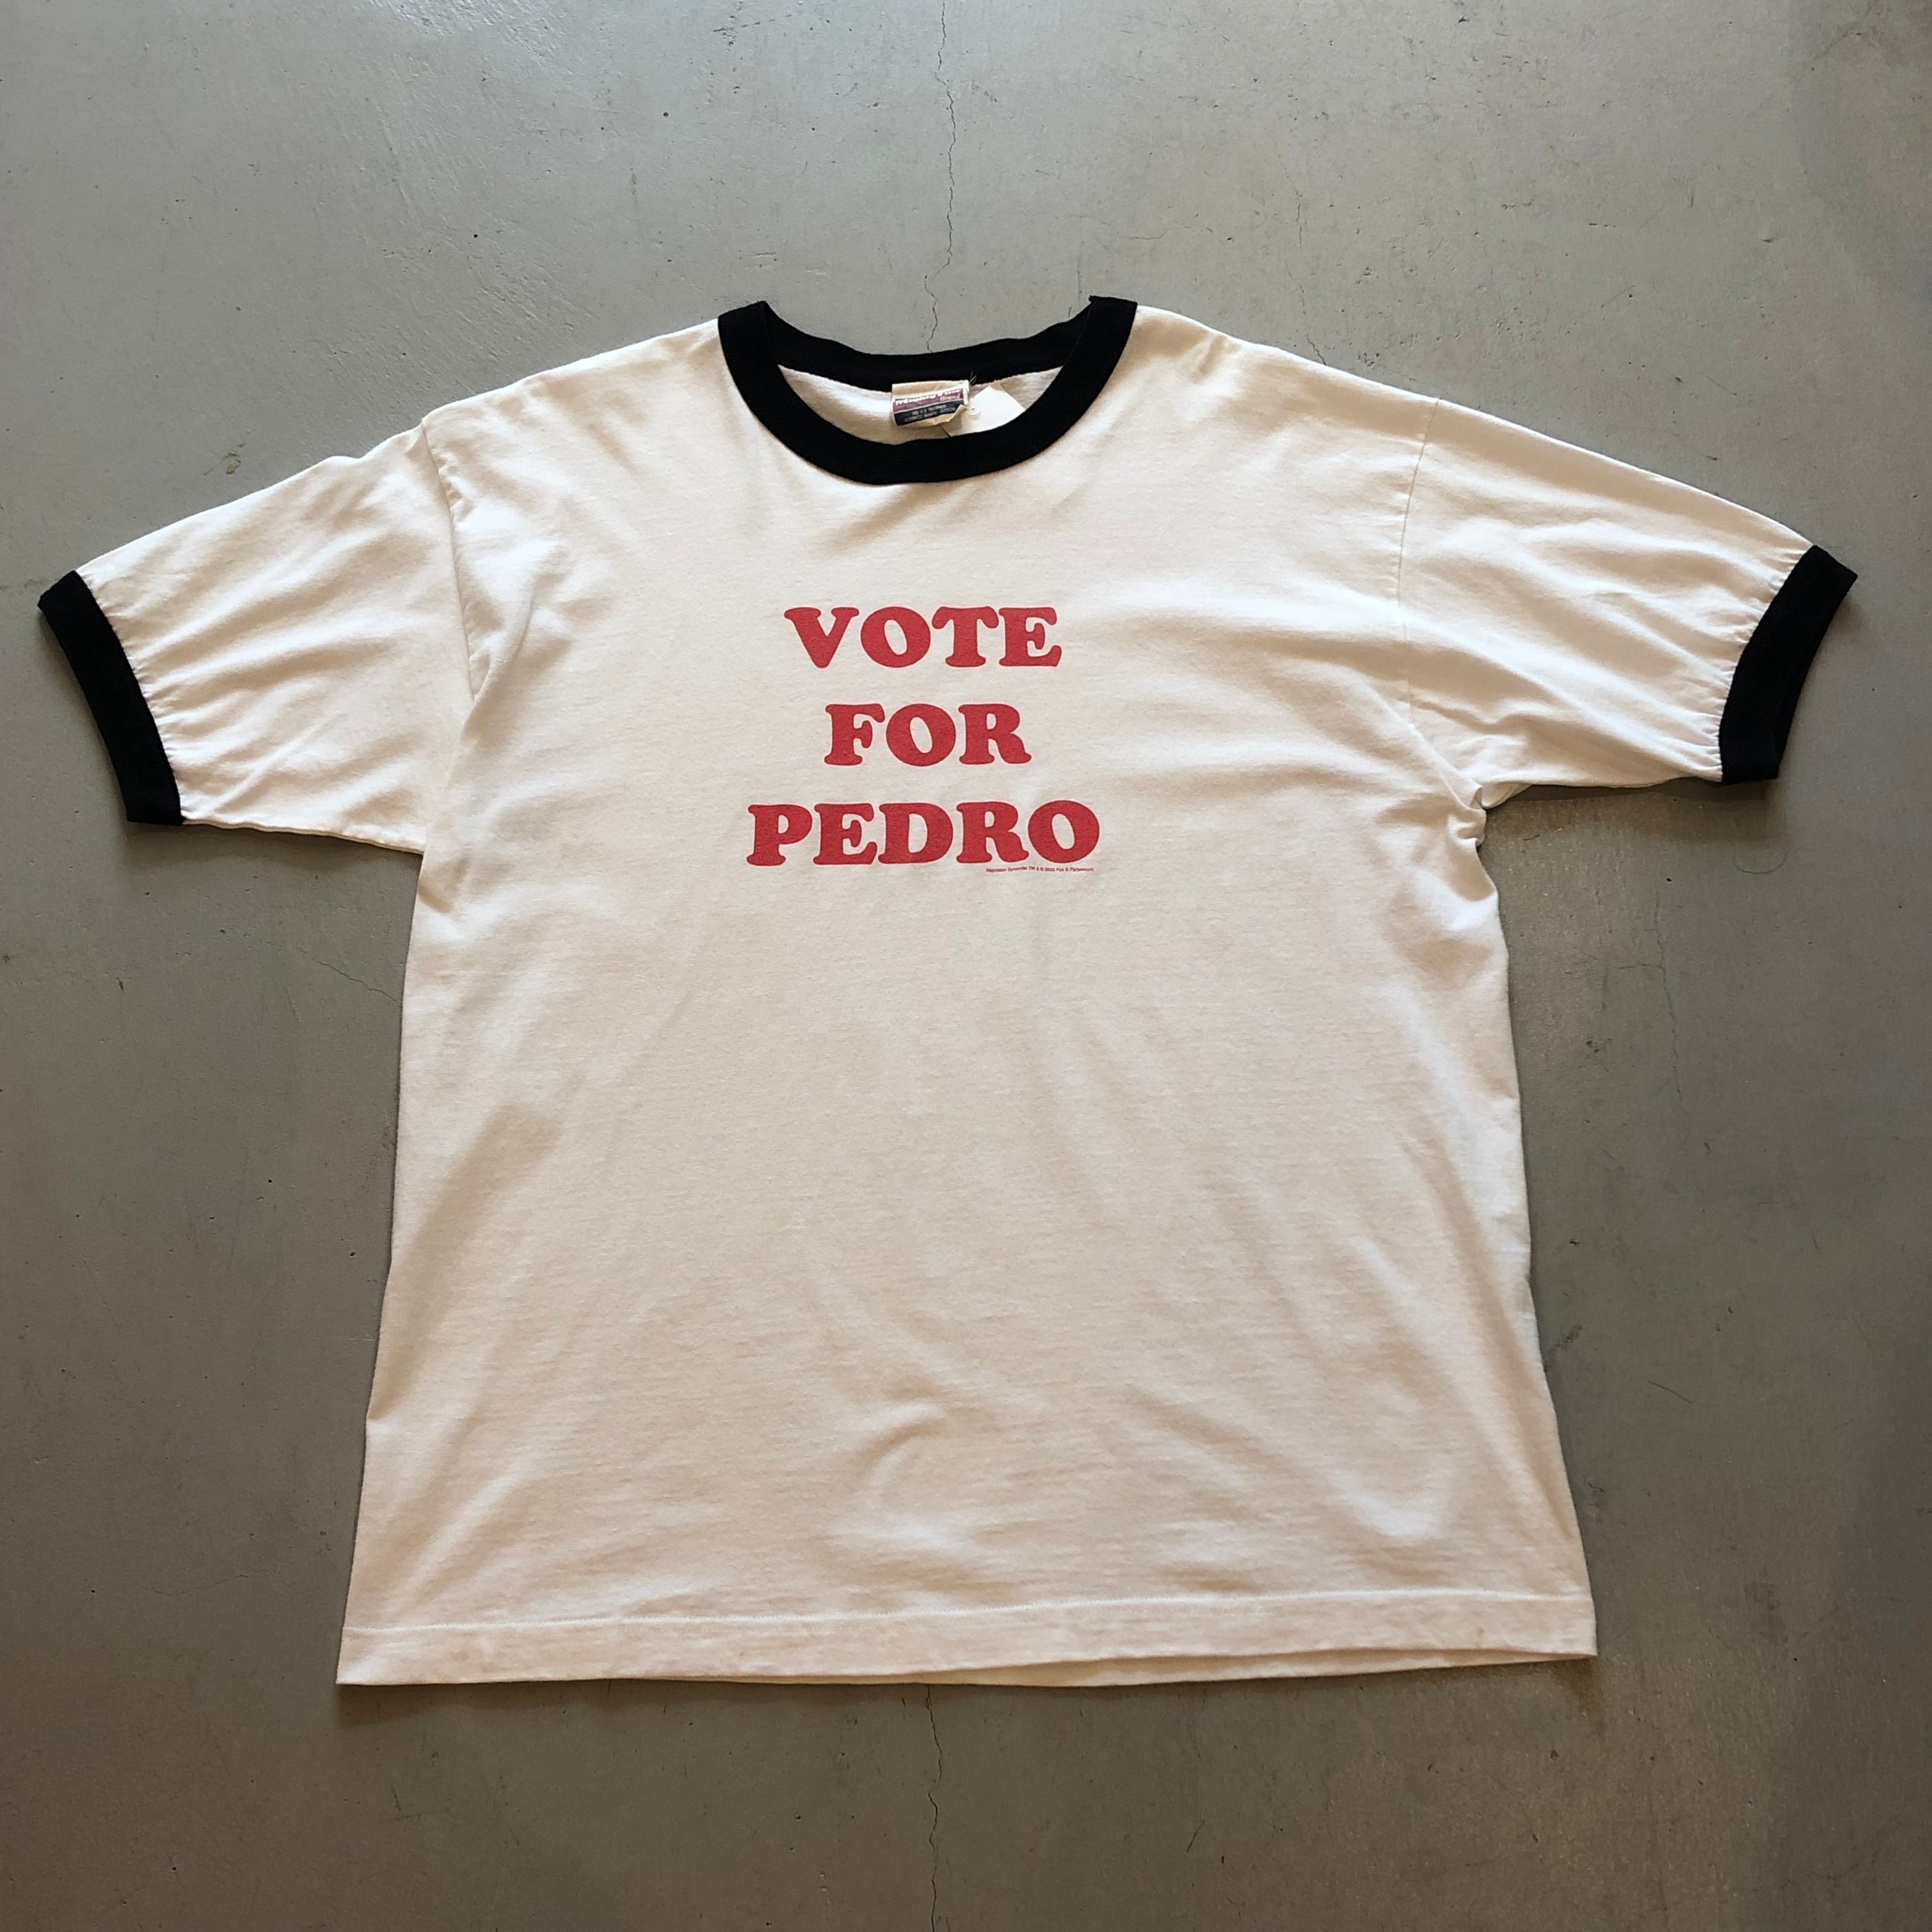 00s Napoleon Dynamite “VOTE FOR PEDRO” ringer t-shirt【高円寺店】 | What'z up